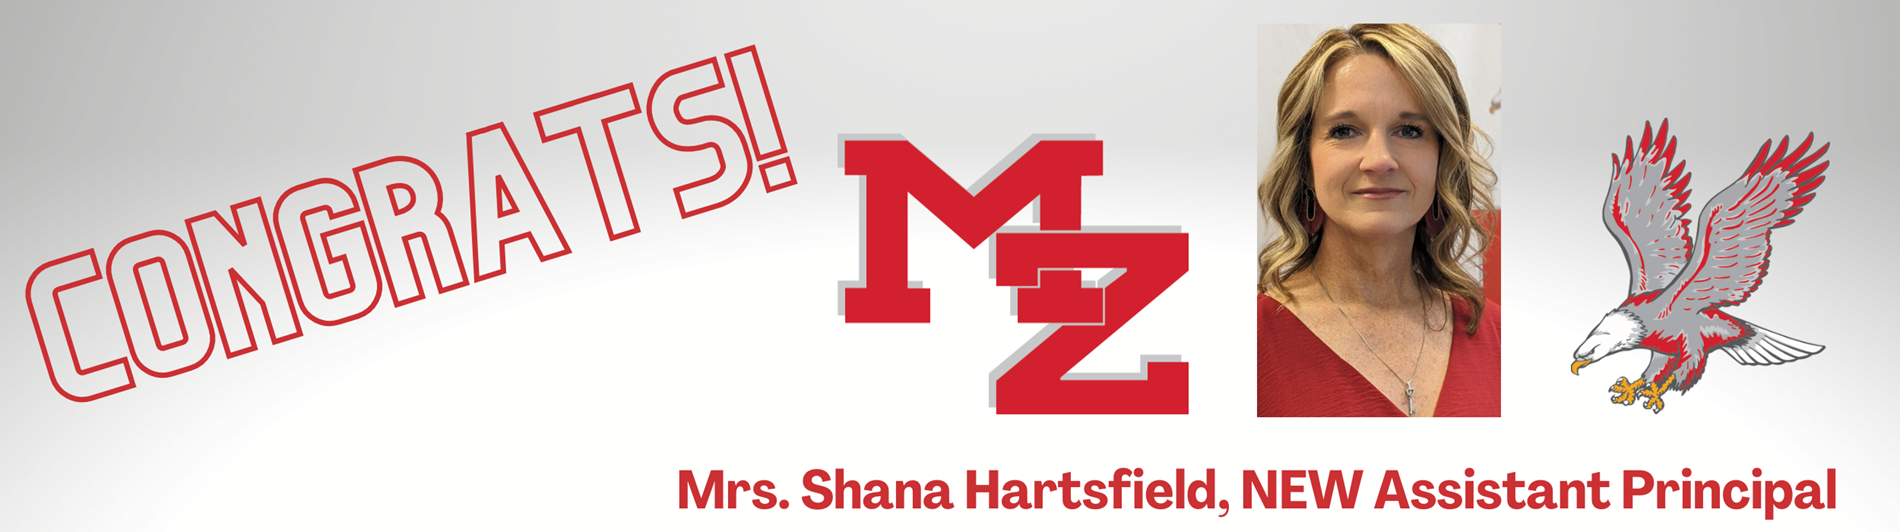 New Assistant Principal, Shana Hartsfield